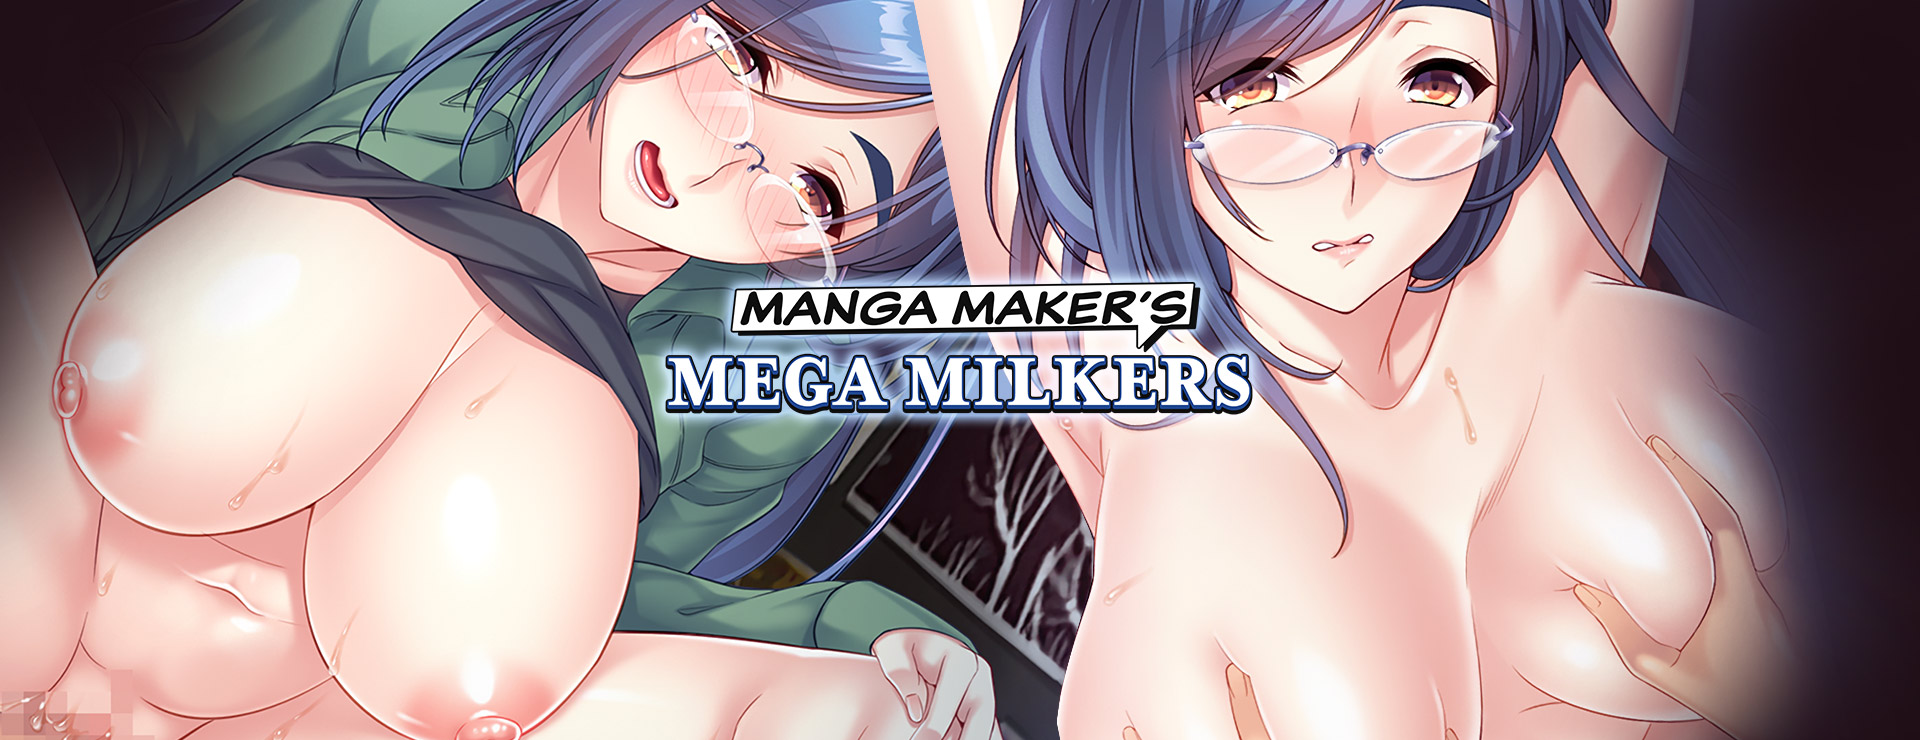 Manga Maker's Mega Milkers - Visual Novel Game